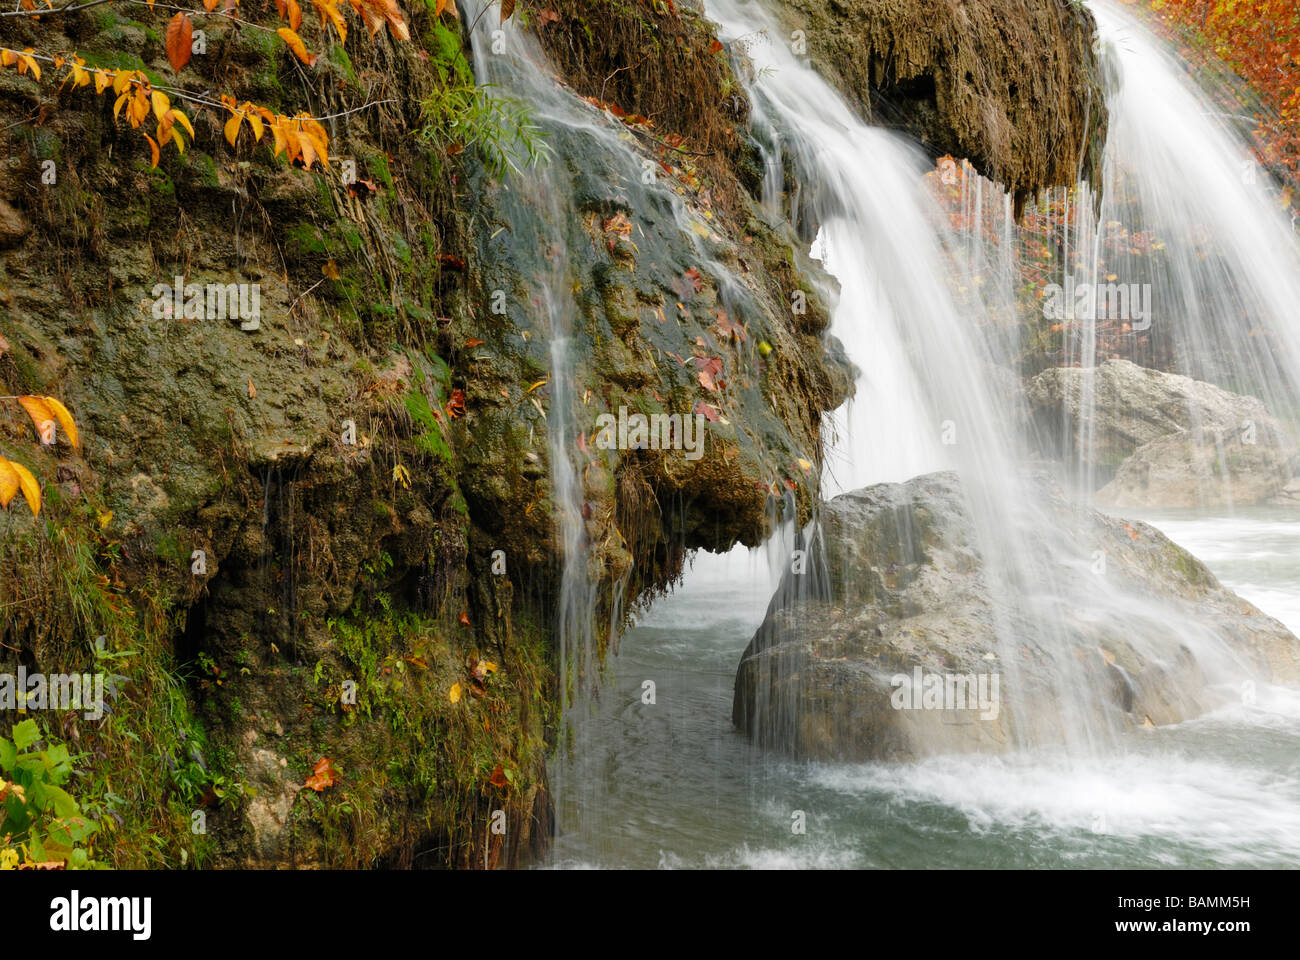 A 77-foot waterfall flows over mossy rocks at Turner Falls Park near Davis, Oklahoma. USA. Stock Photo